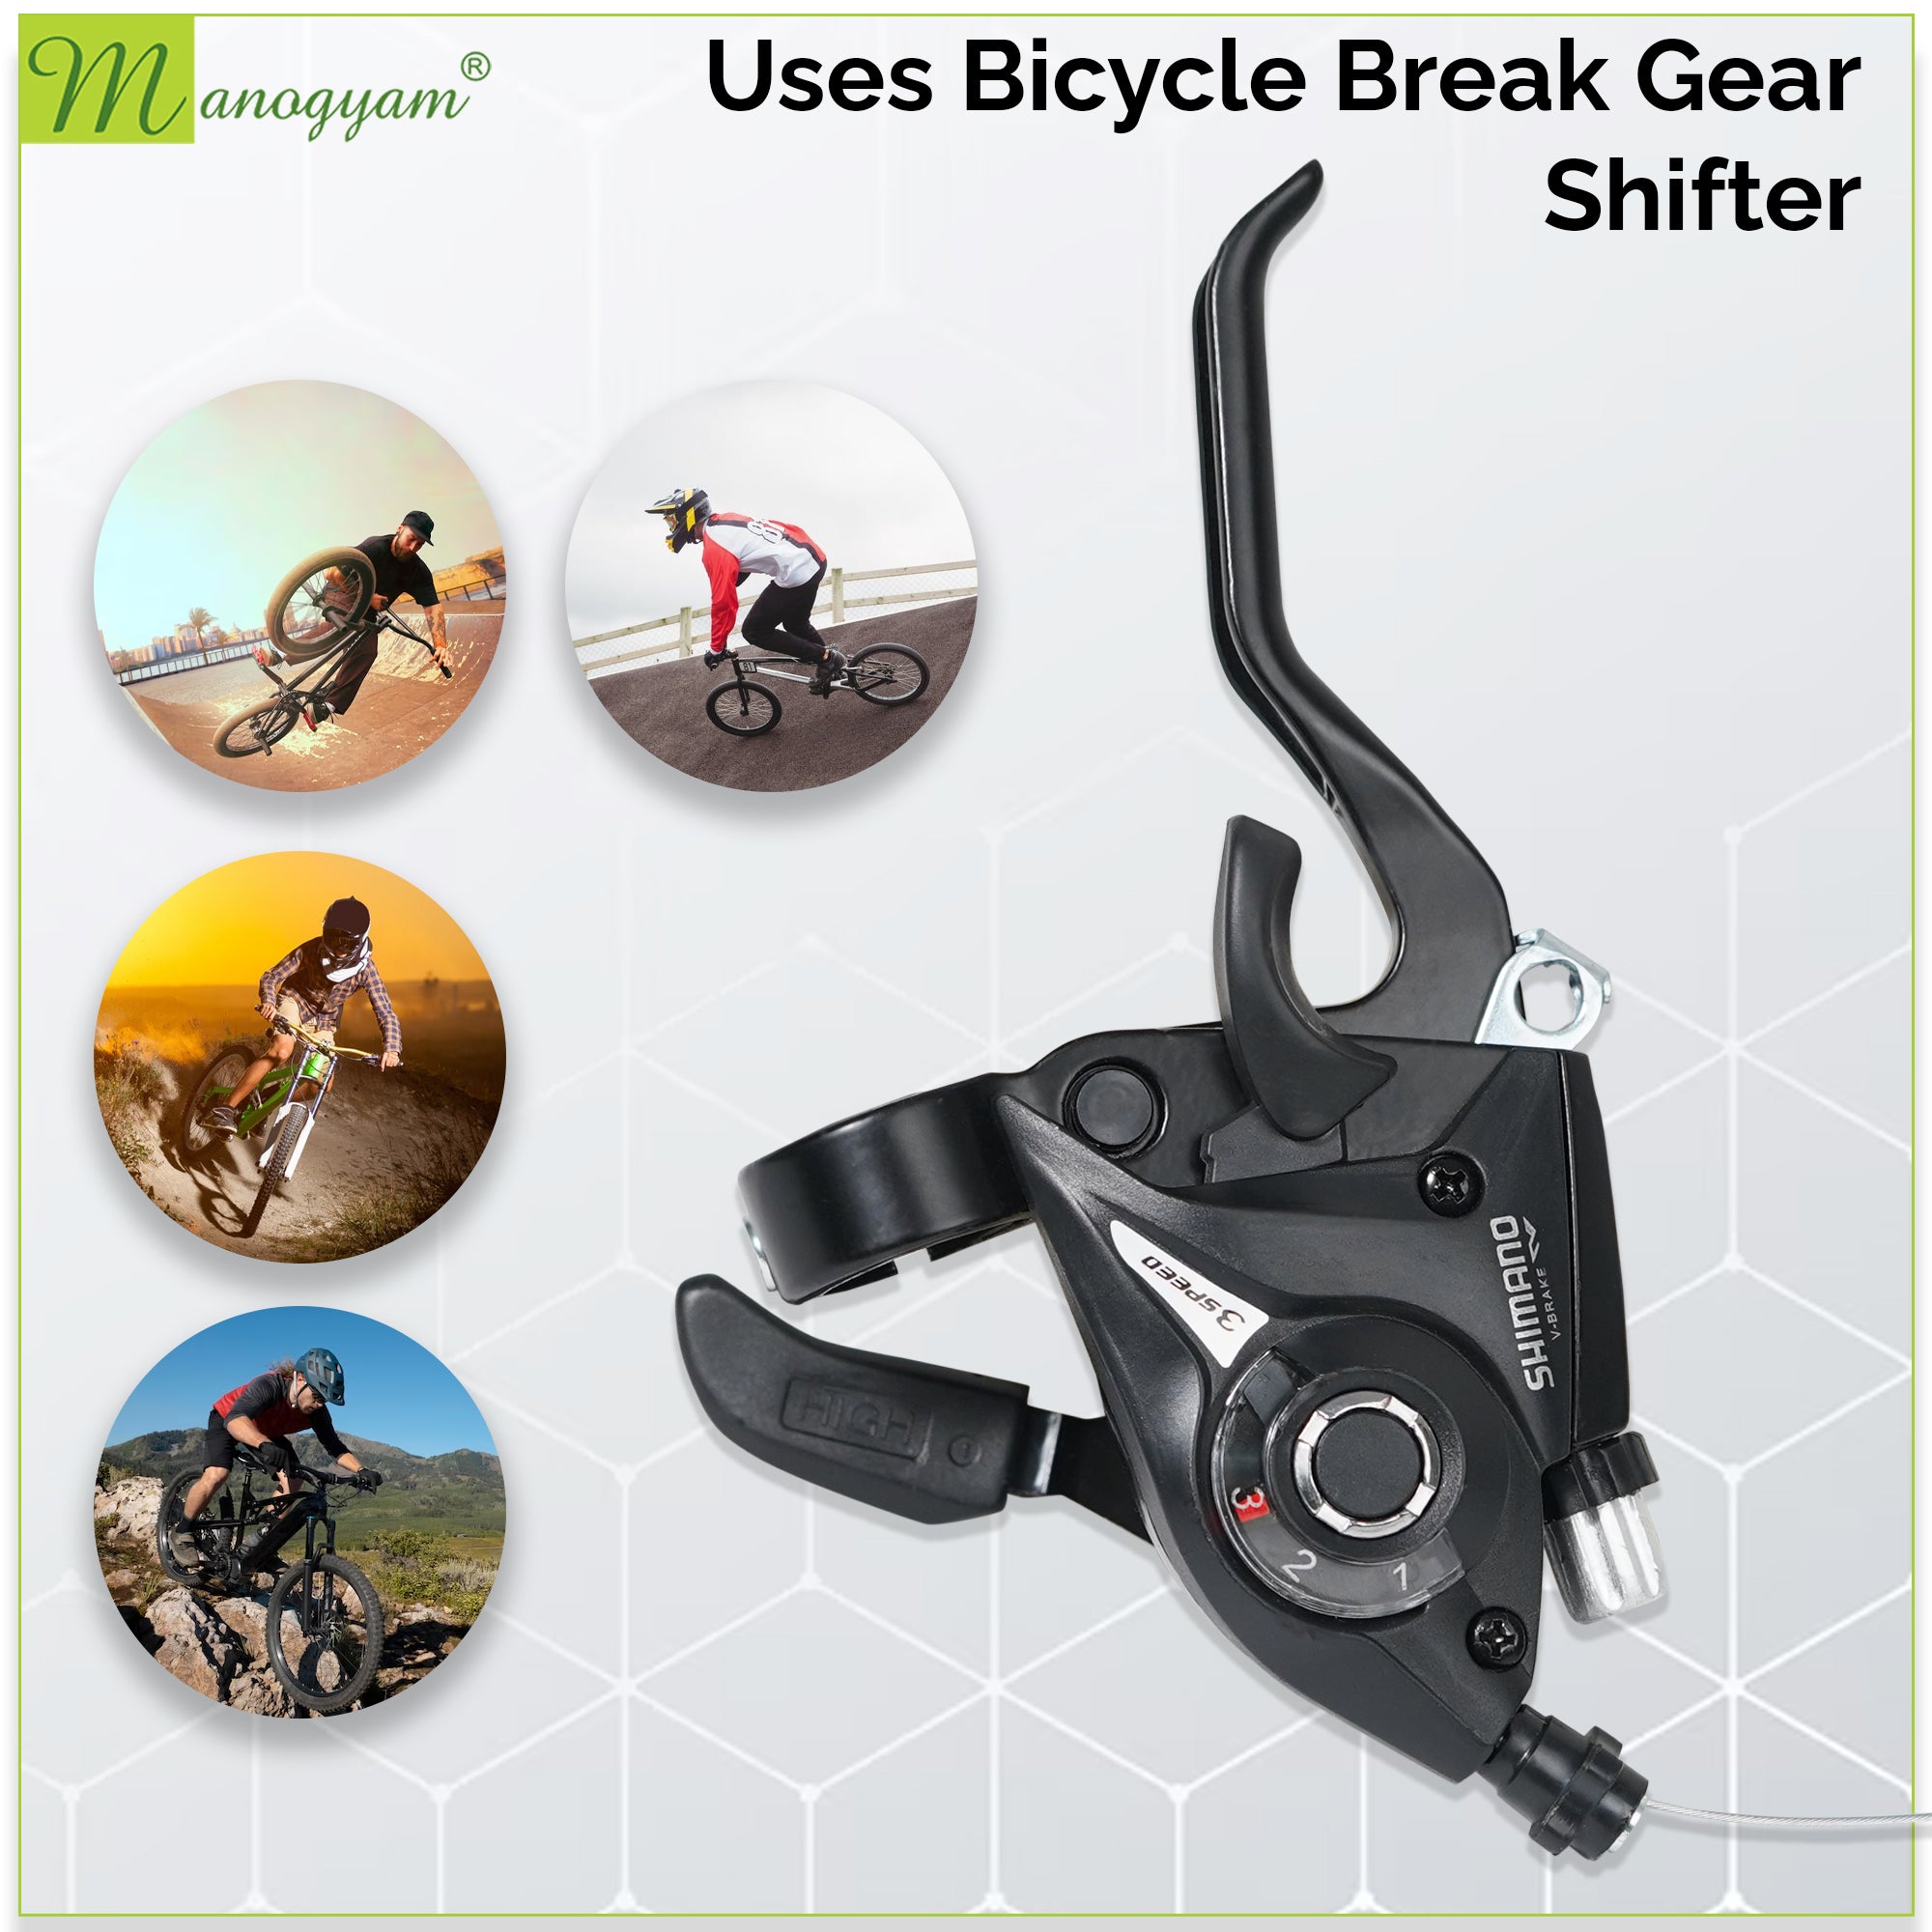 Manogyam SwiftShift Bicycle Gear Shifter